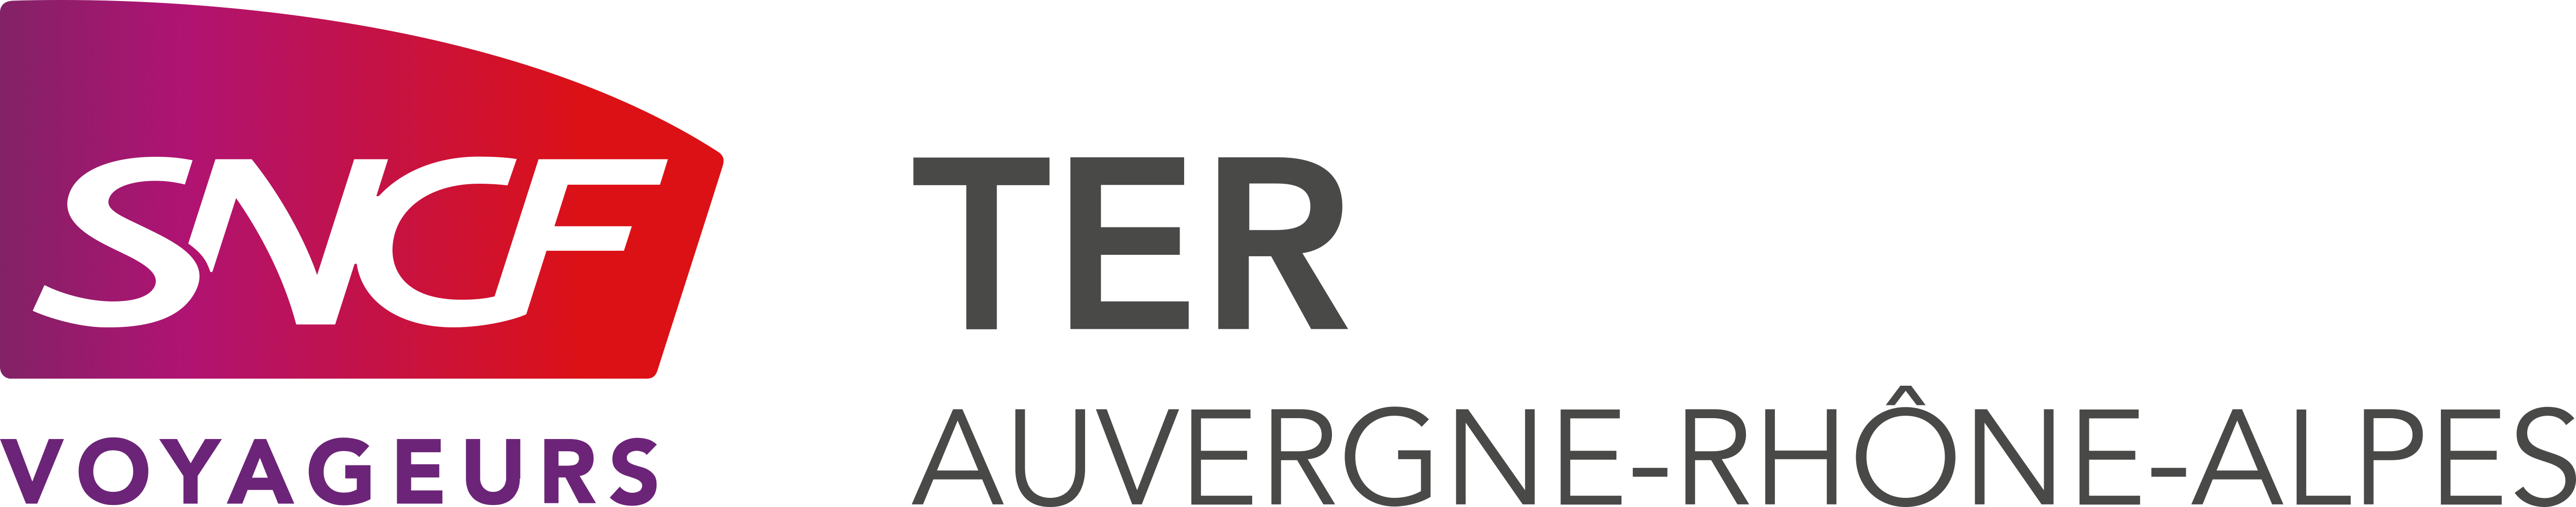 Logo SNCF Voyageurs TER AUVERGNE-RHÔNE-ALPES